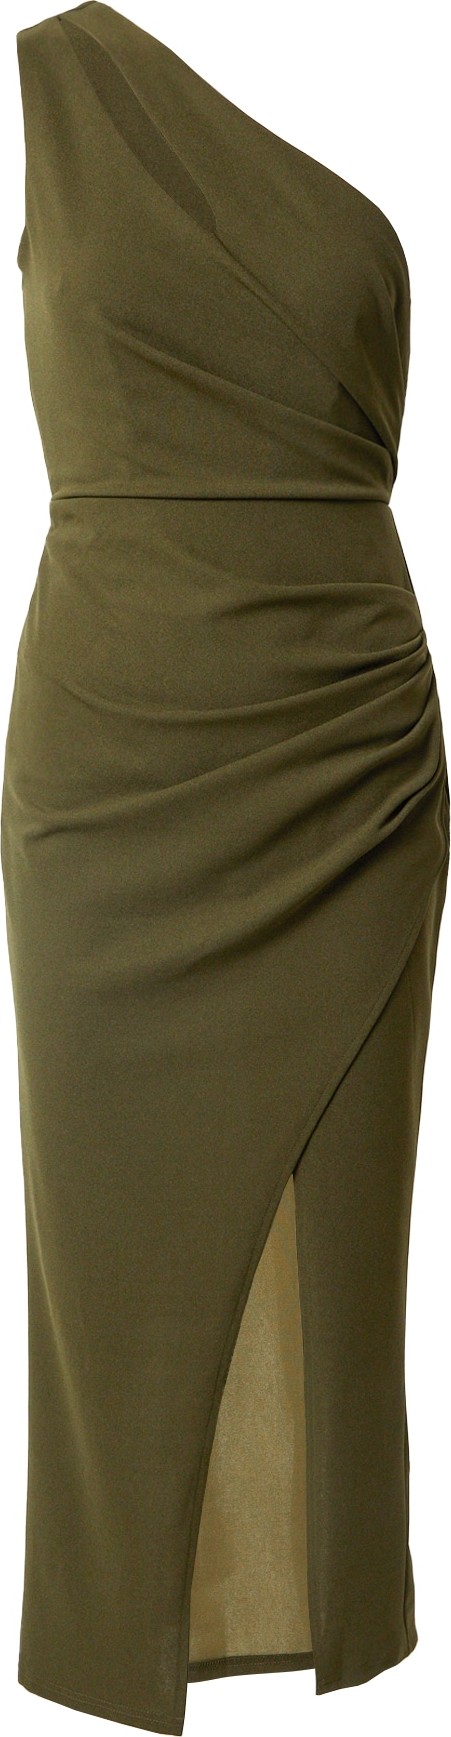 Skirt & Stiletto Společenské šaty 'LIA' khaki